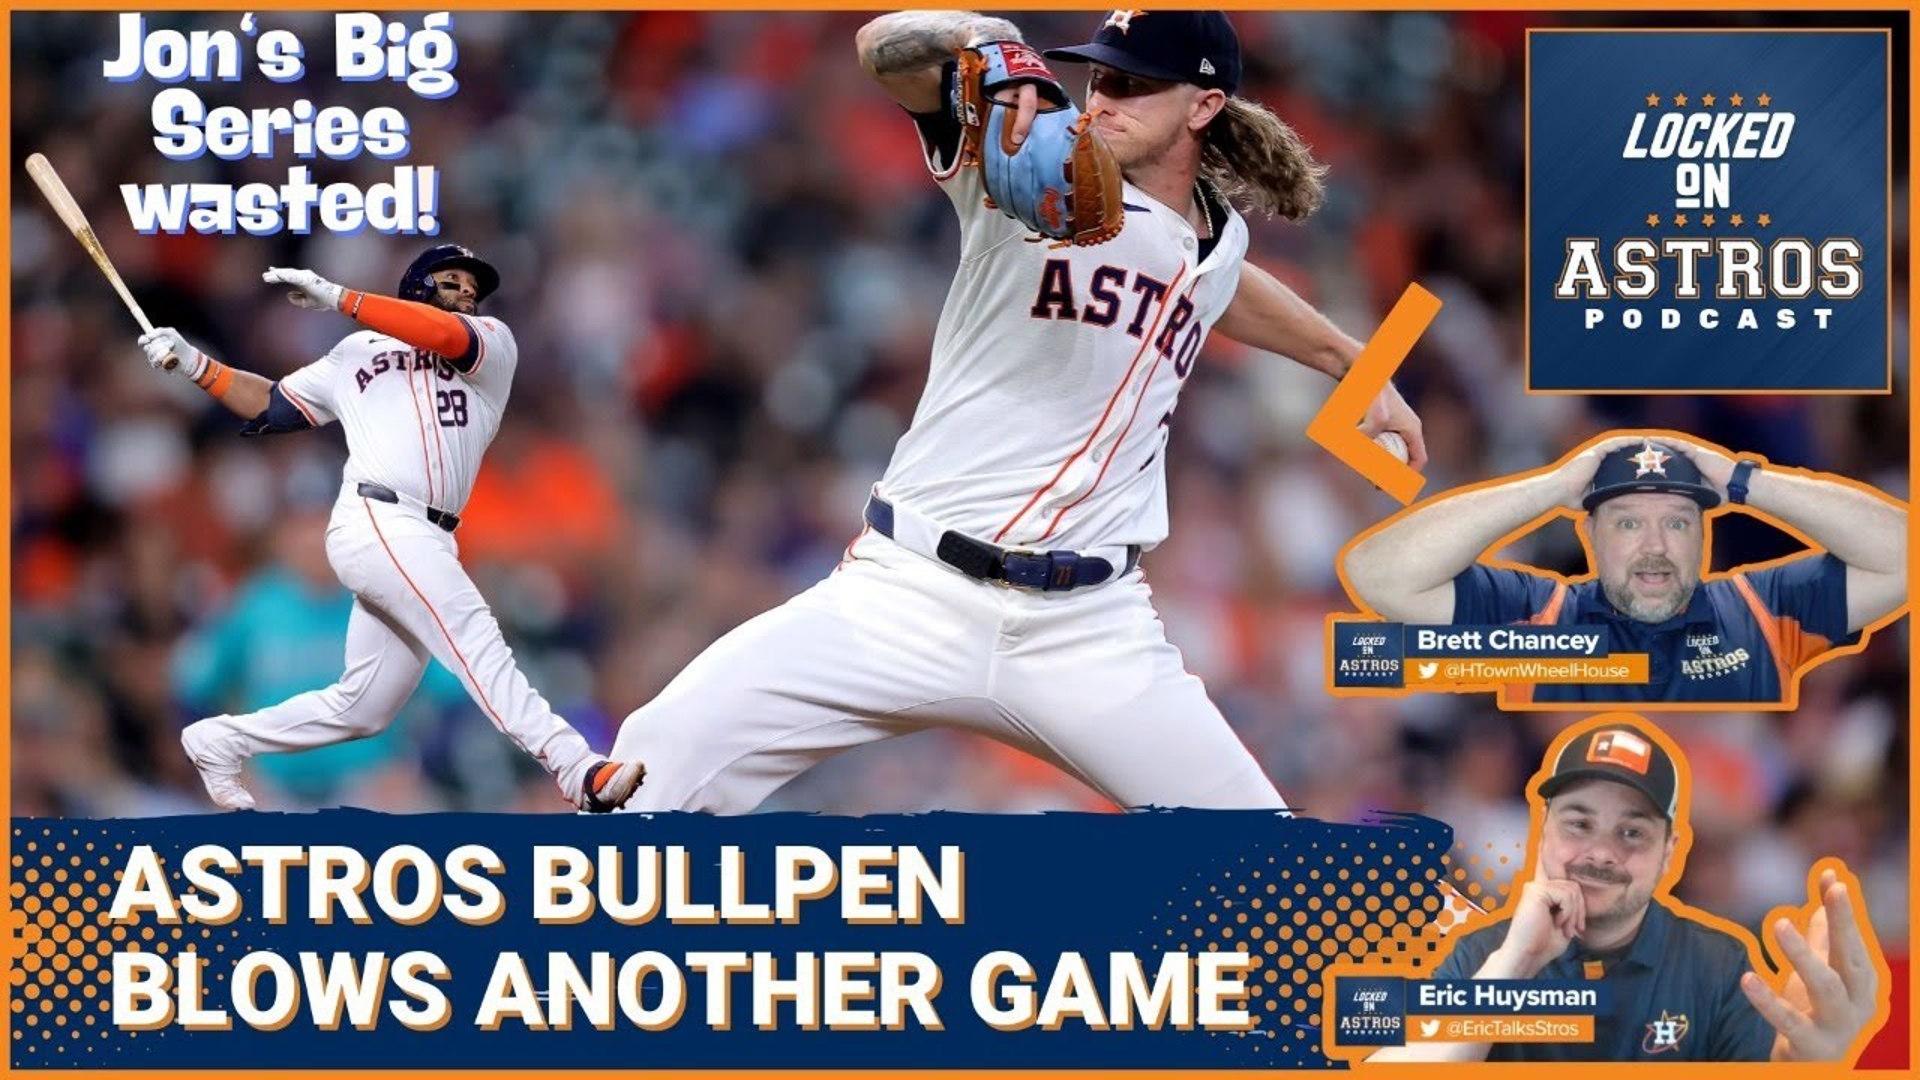 Astros take Lead, as Bullpen Blows the win